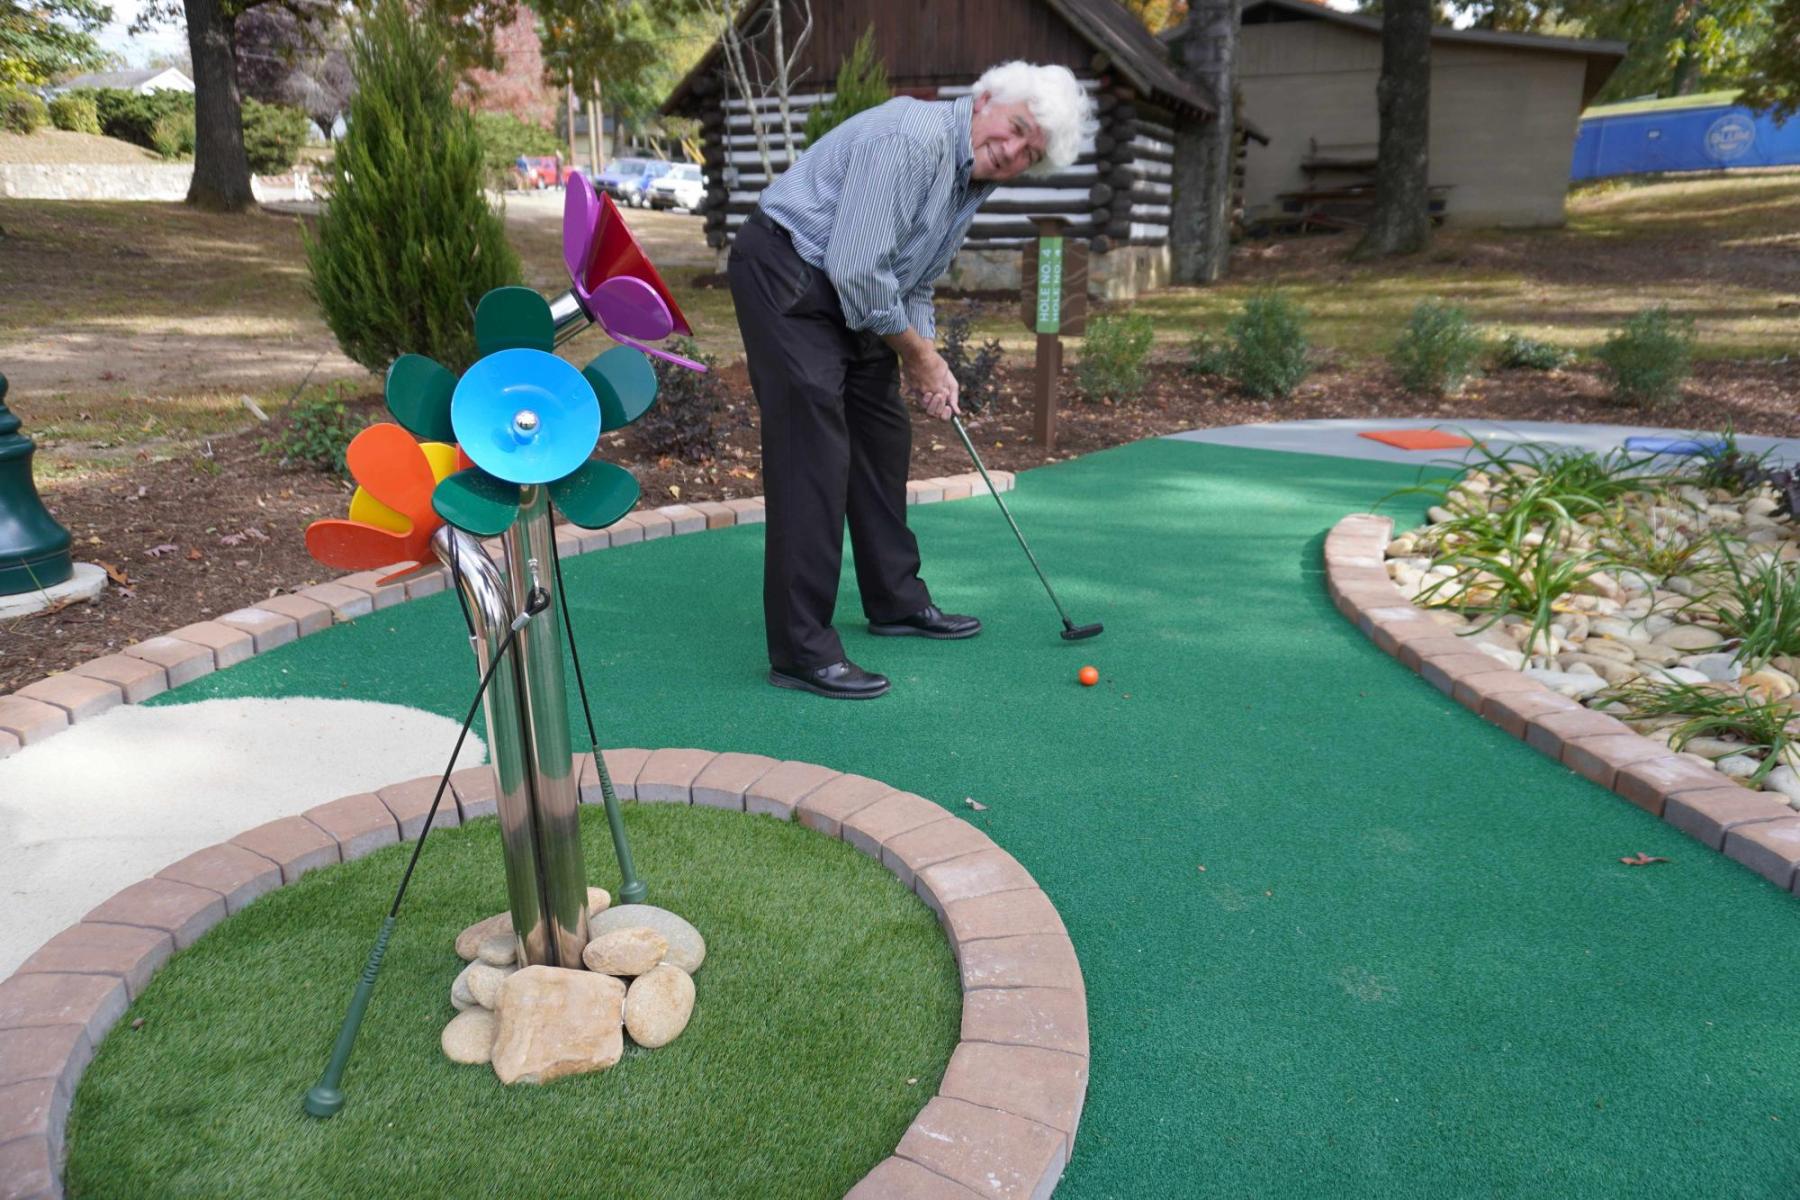 Tommy Shipman playing mini golf near a musical flower installation